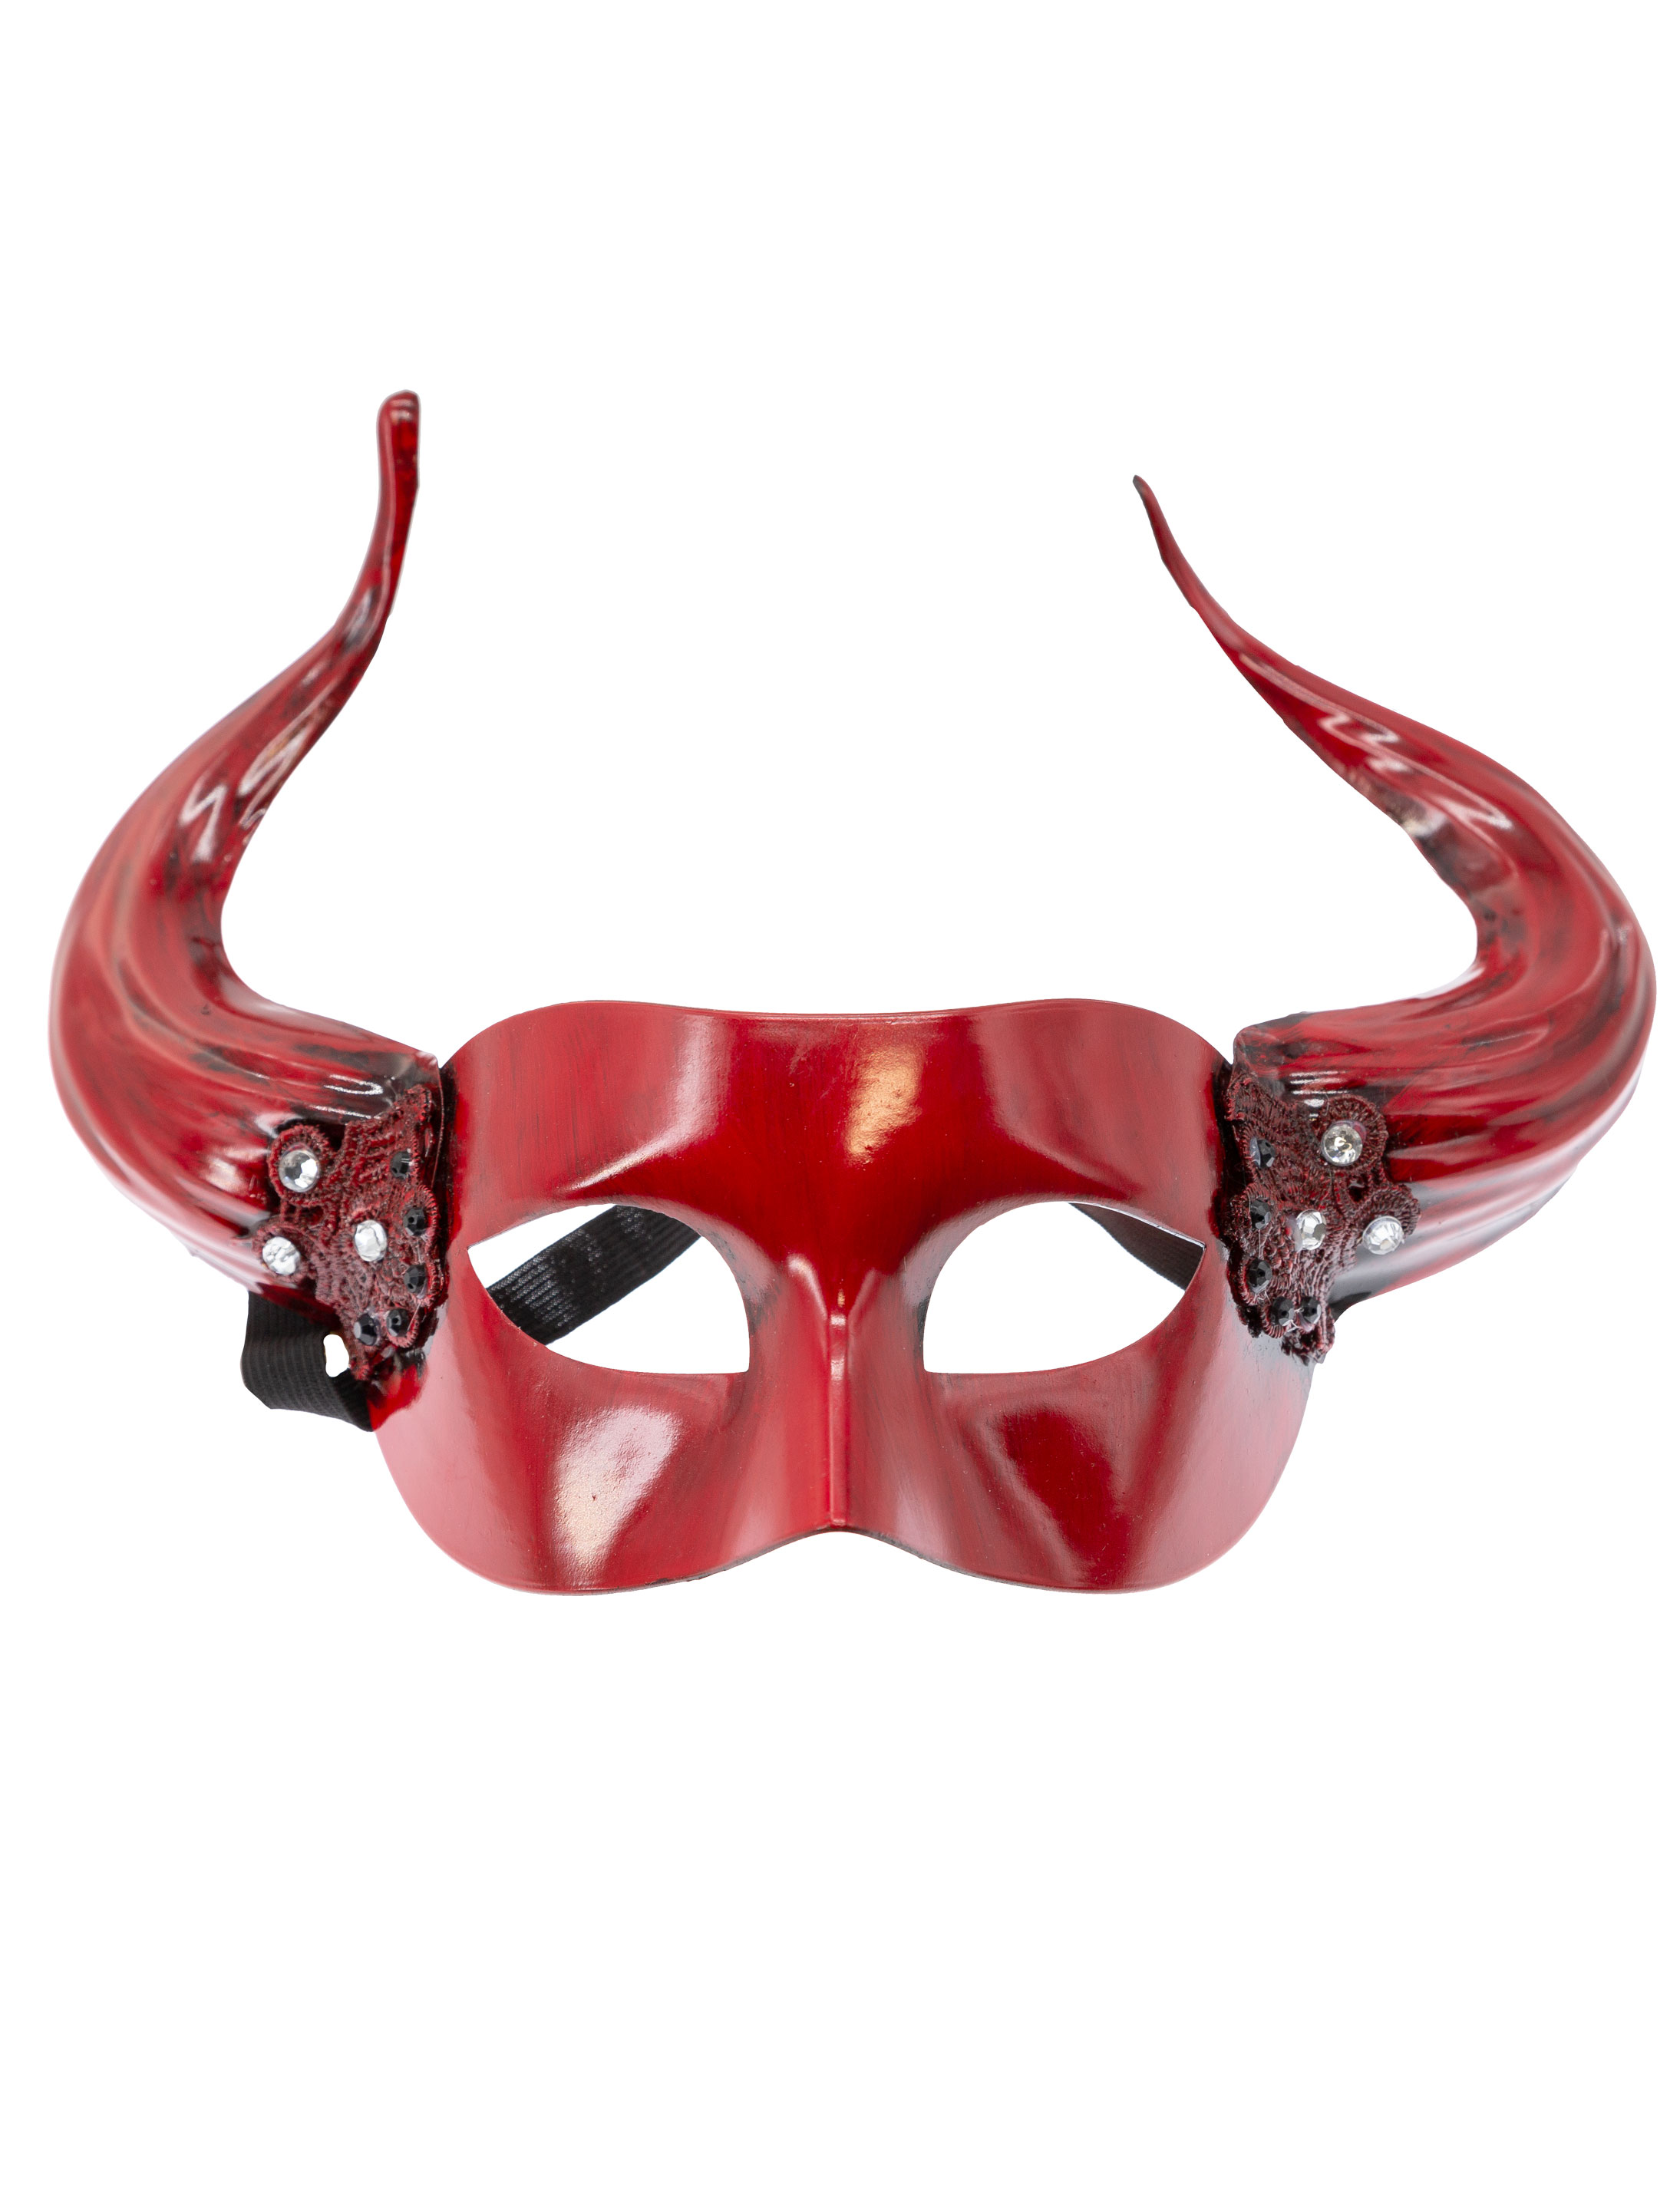 Maske mit Hörnern rot